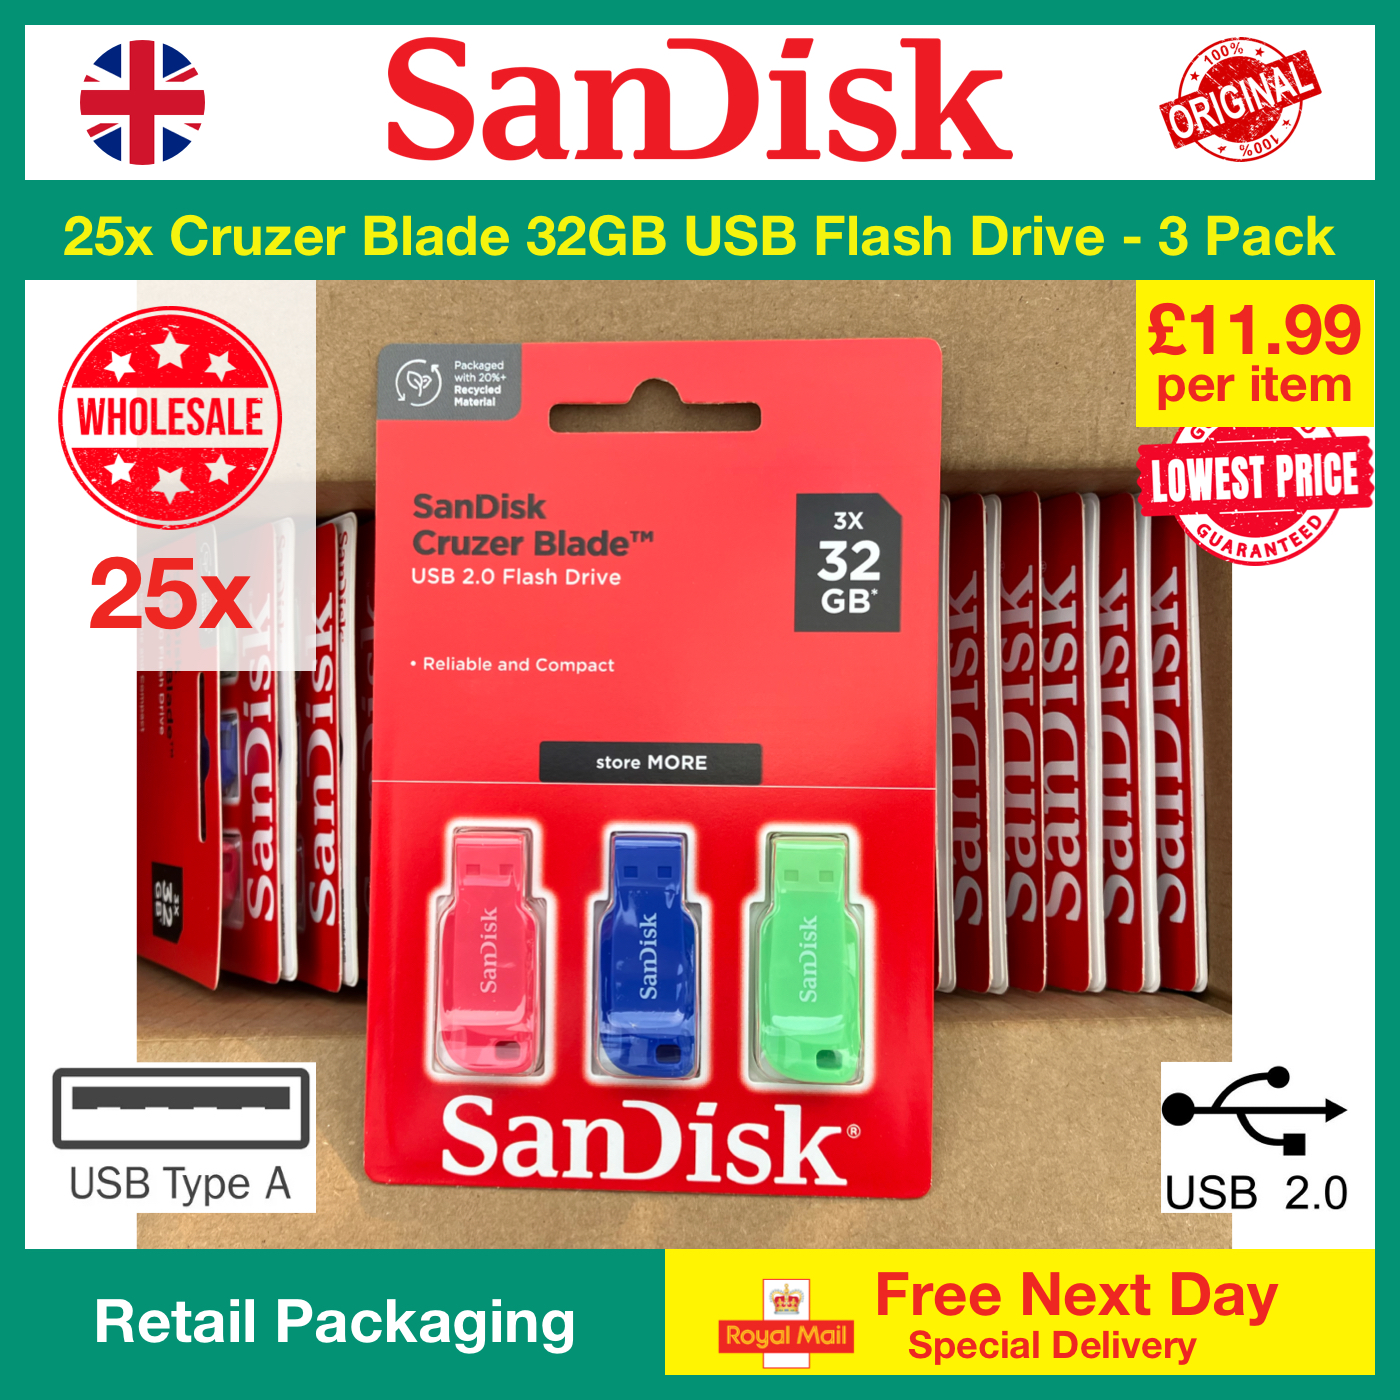 25x SanDisk Cruzer Blade 32GB 3-Pack USB Flash Drive 3 Pack Wholesale